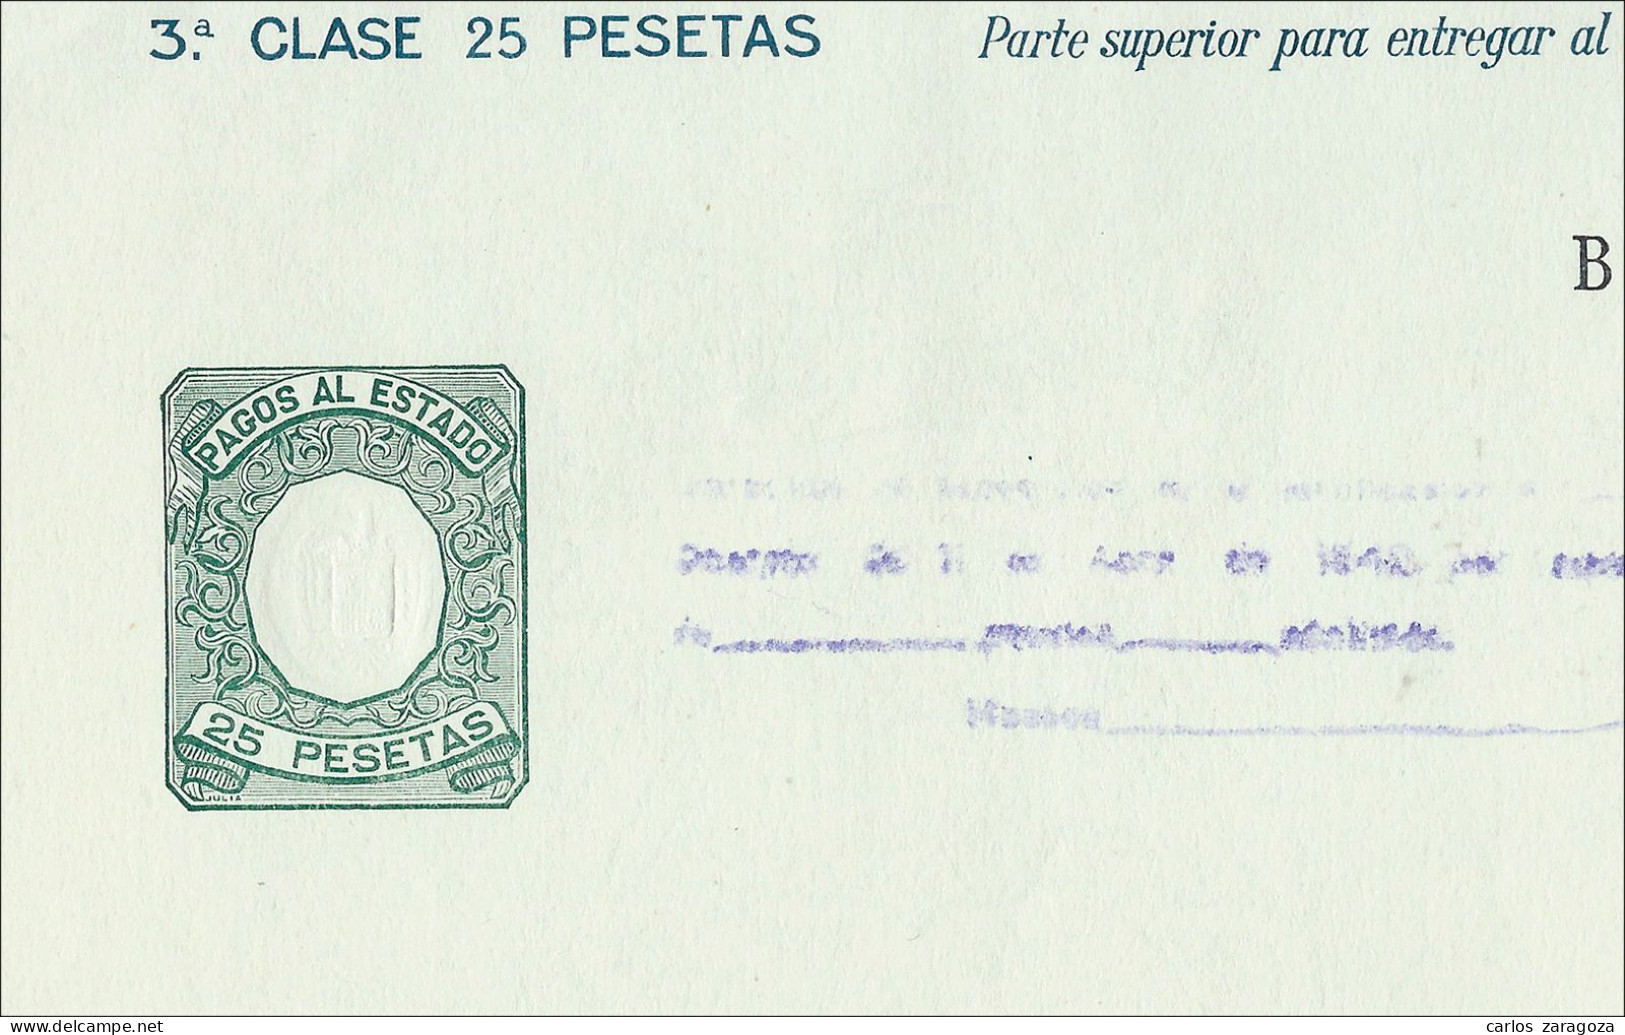 ESPAÑA 1942—PAGOS AL ESTADO 25 Ptas—Marca De Agua: AGUILA + TIMBRE DEL ESTADO - Fiscales